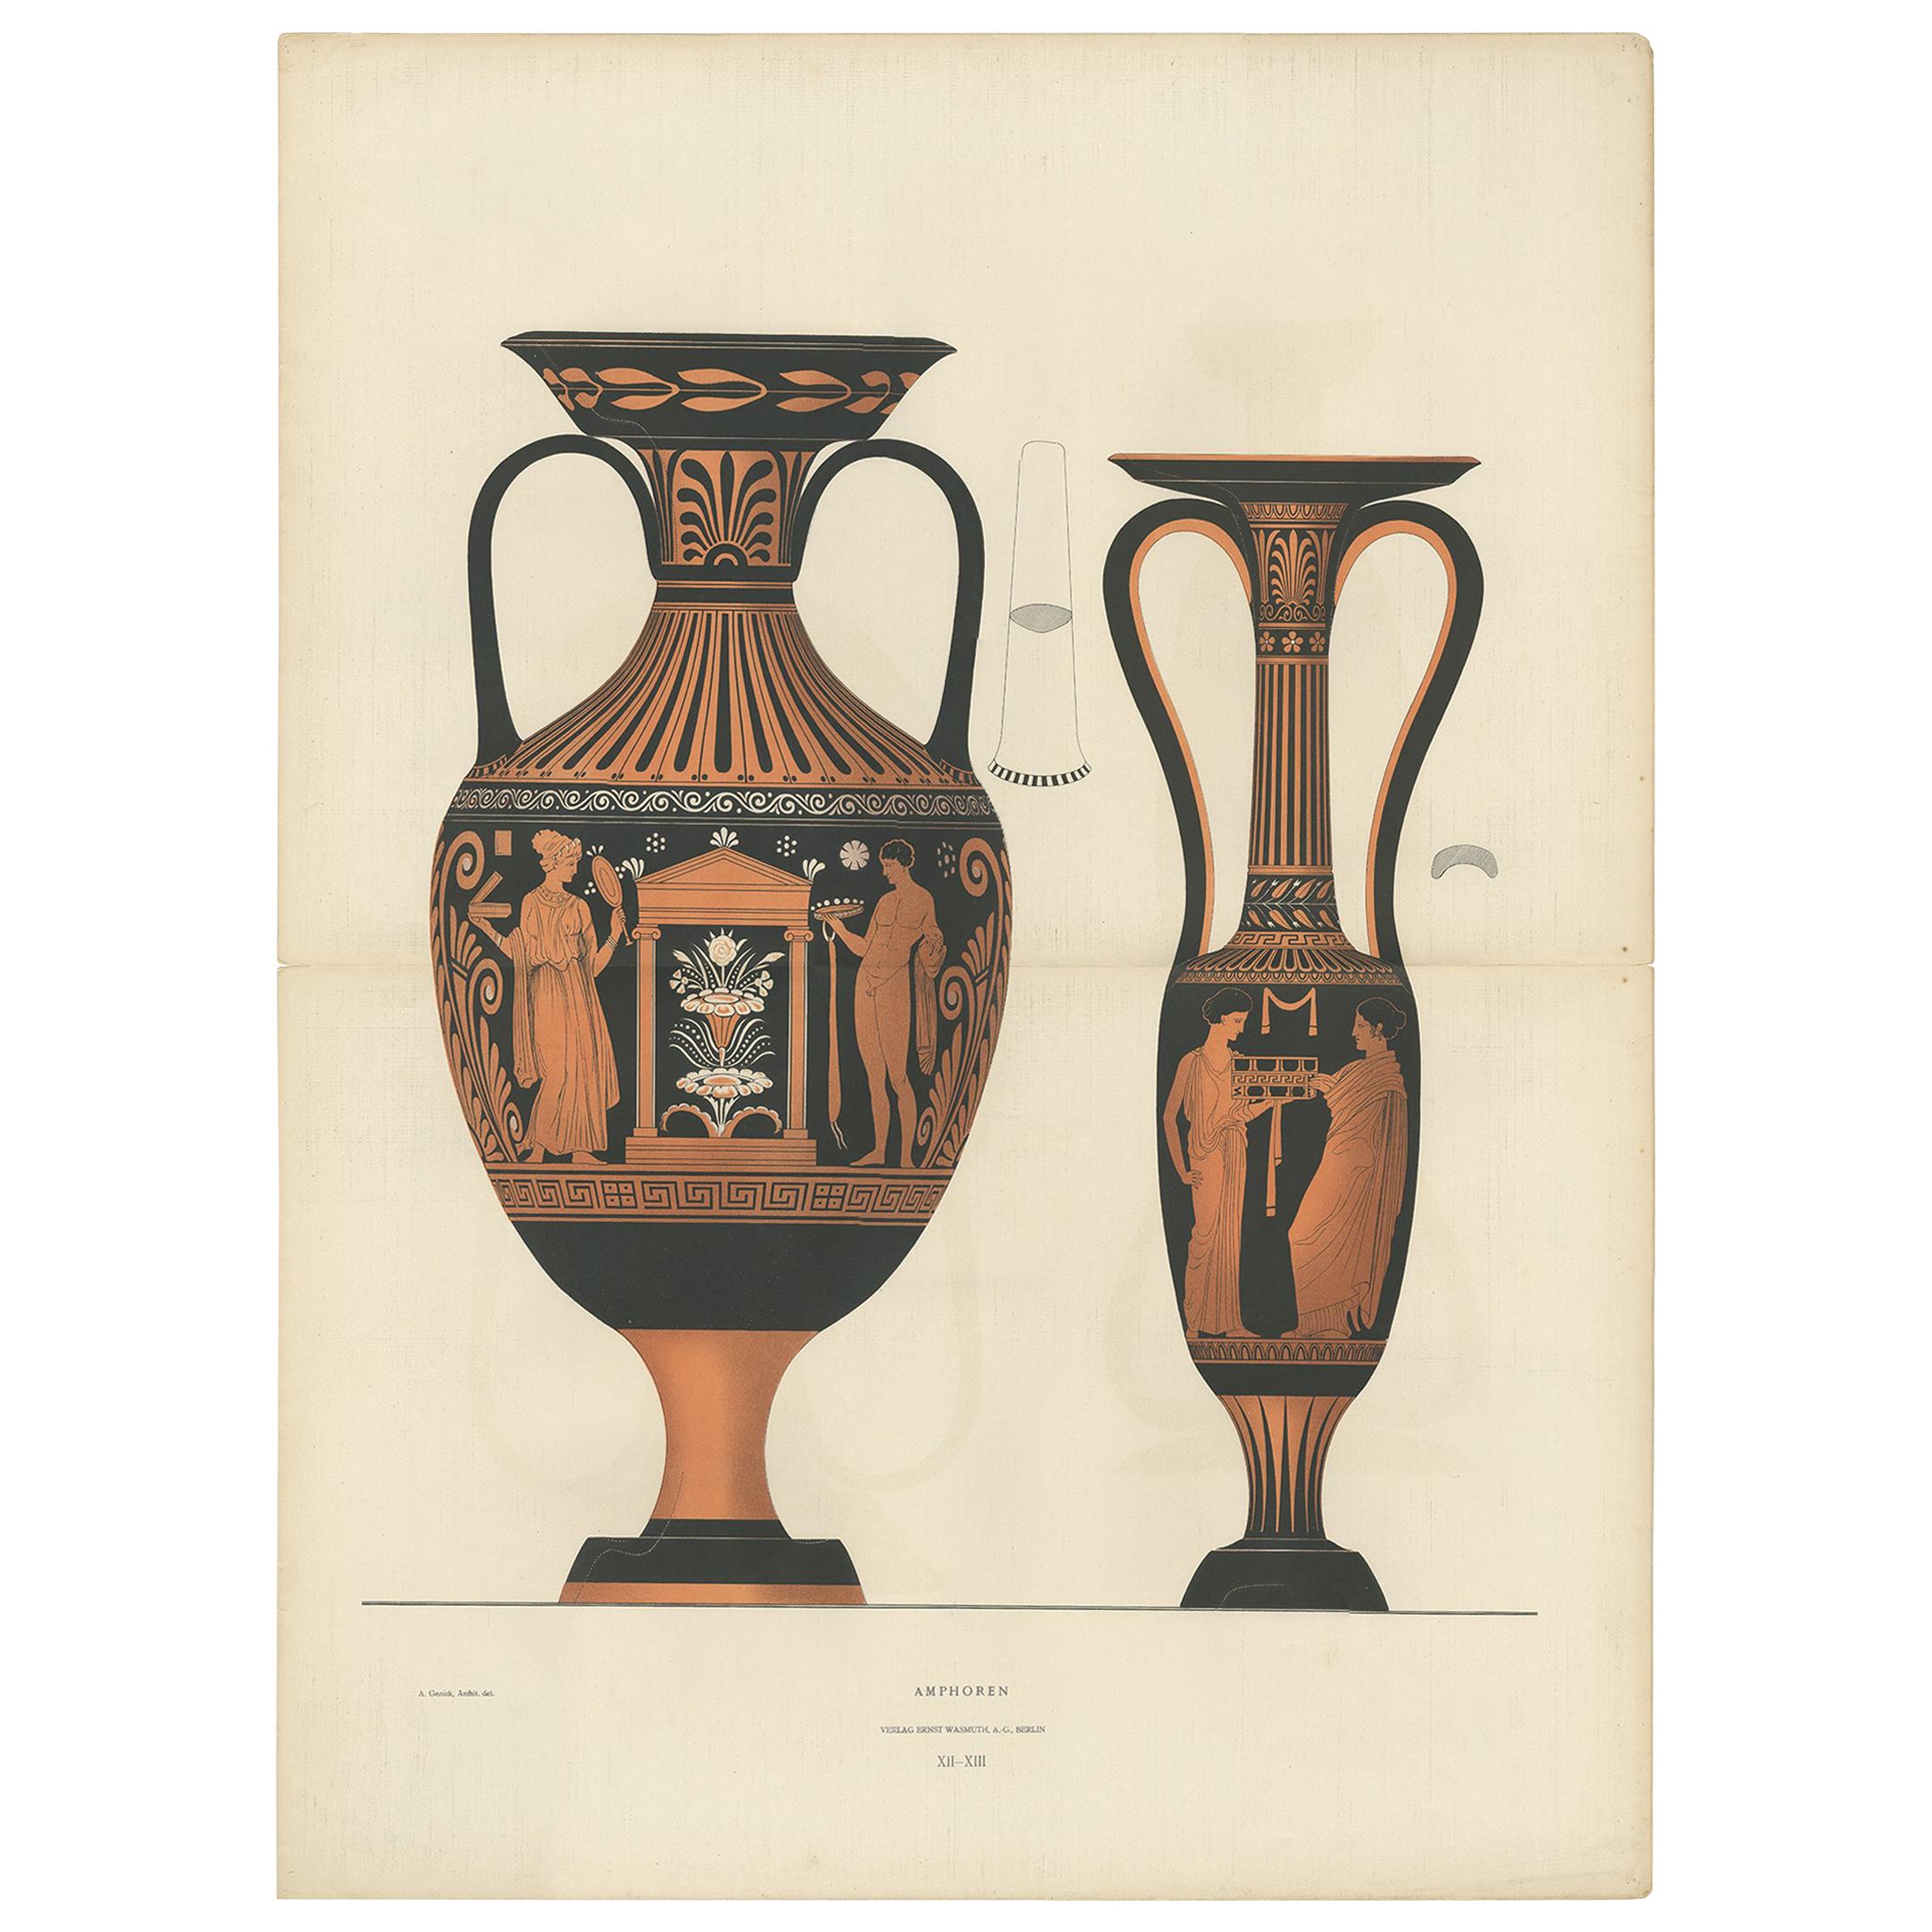 Antique Print of Greek Ceramics 'Amphoren' by Genick, '1883'